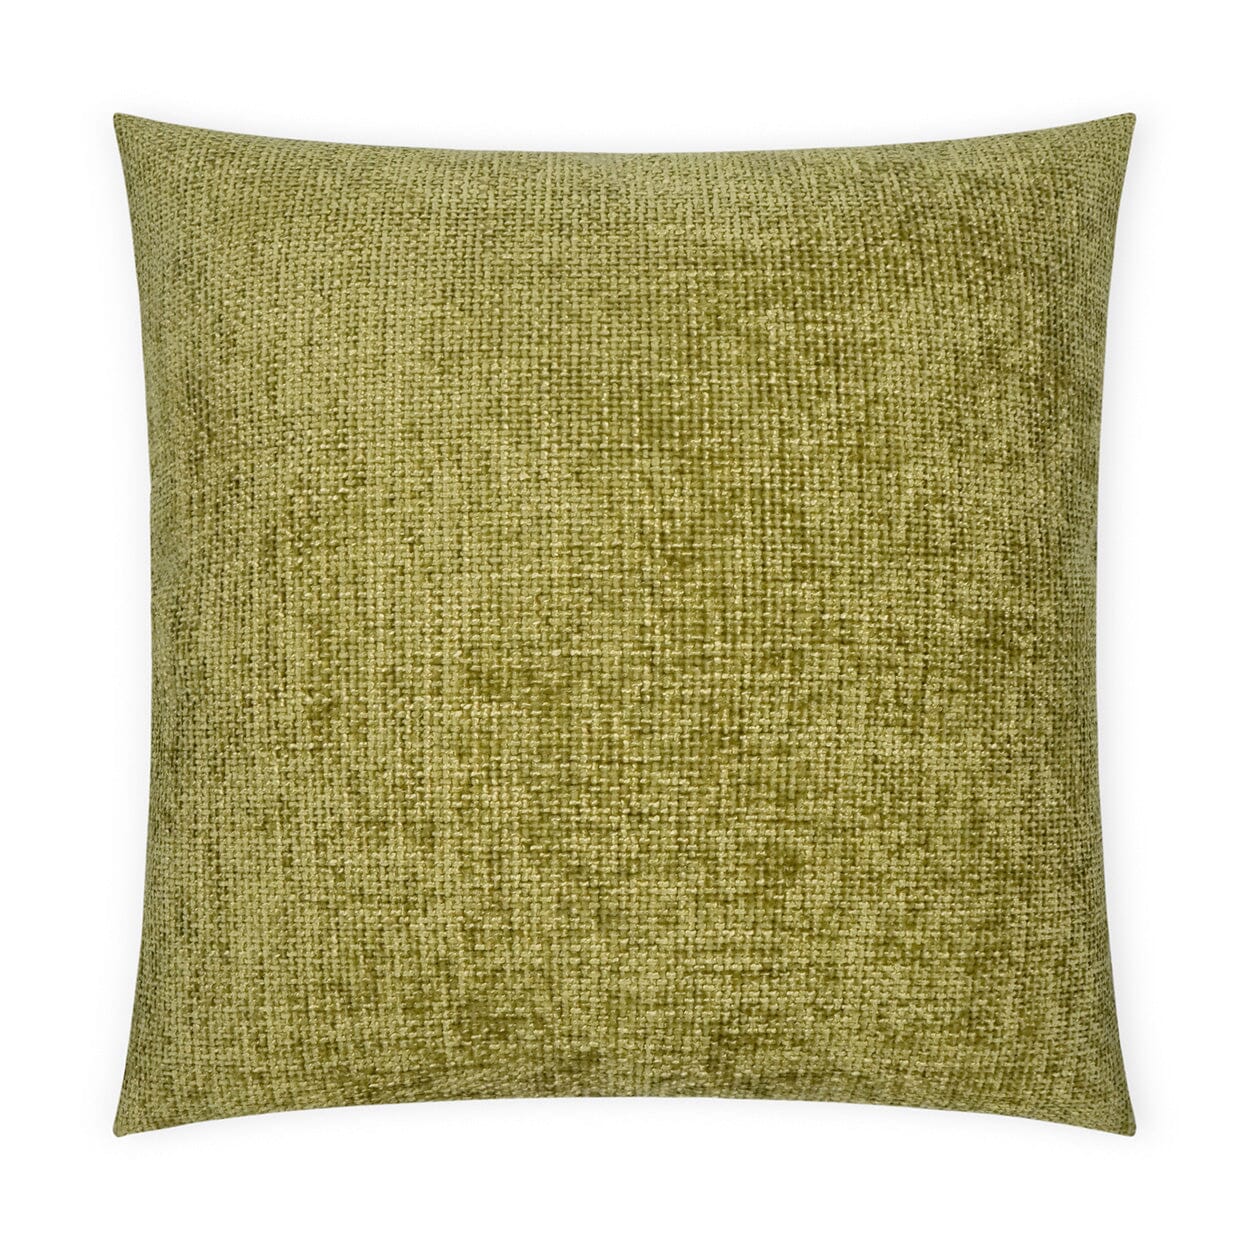 D.V. Kap 24" x 24" Decorative Throw Pillow | Norse Pillows D.V Kap Home